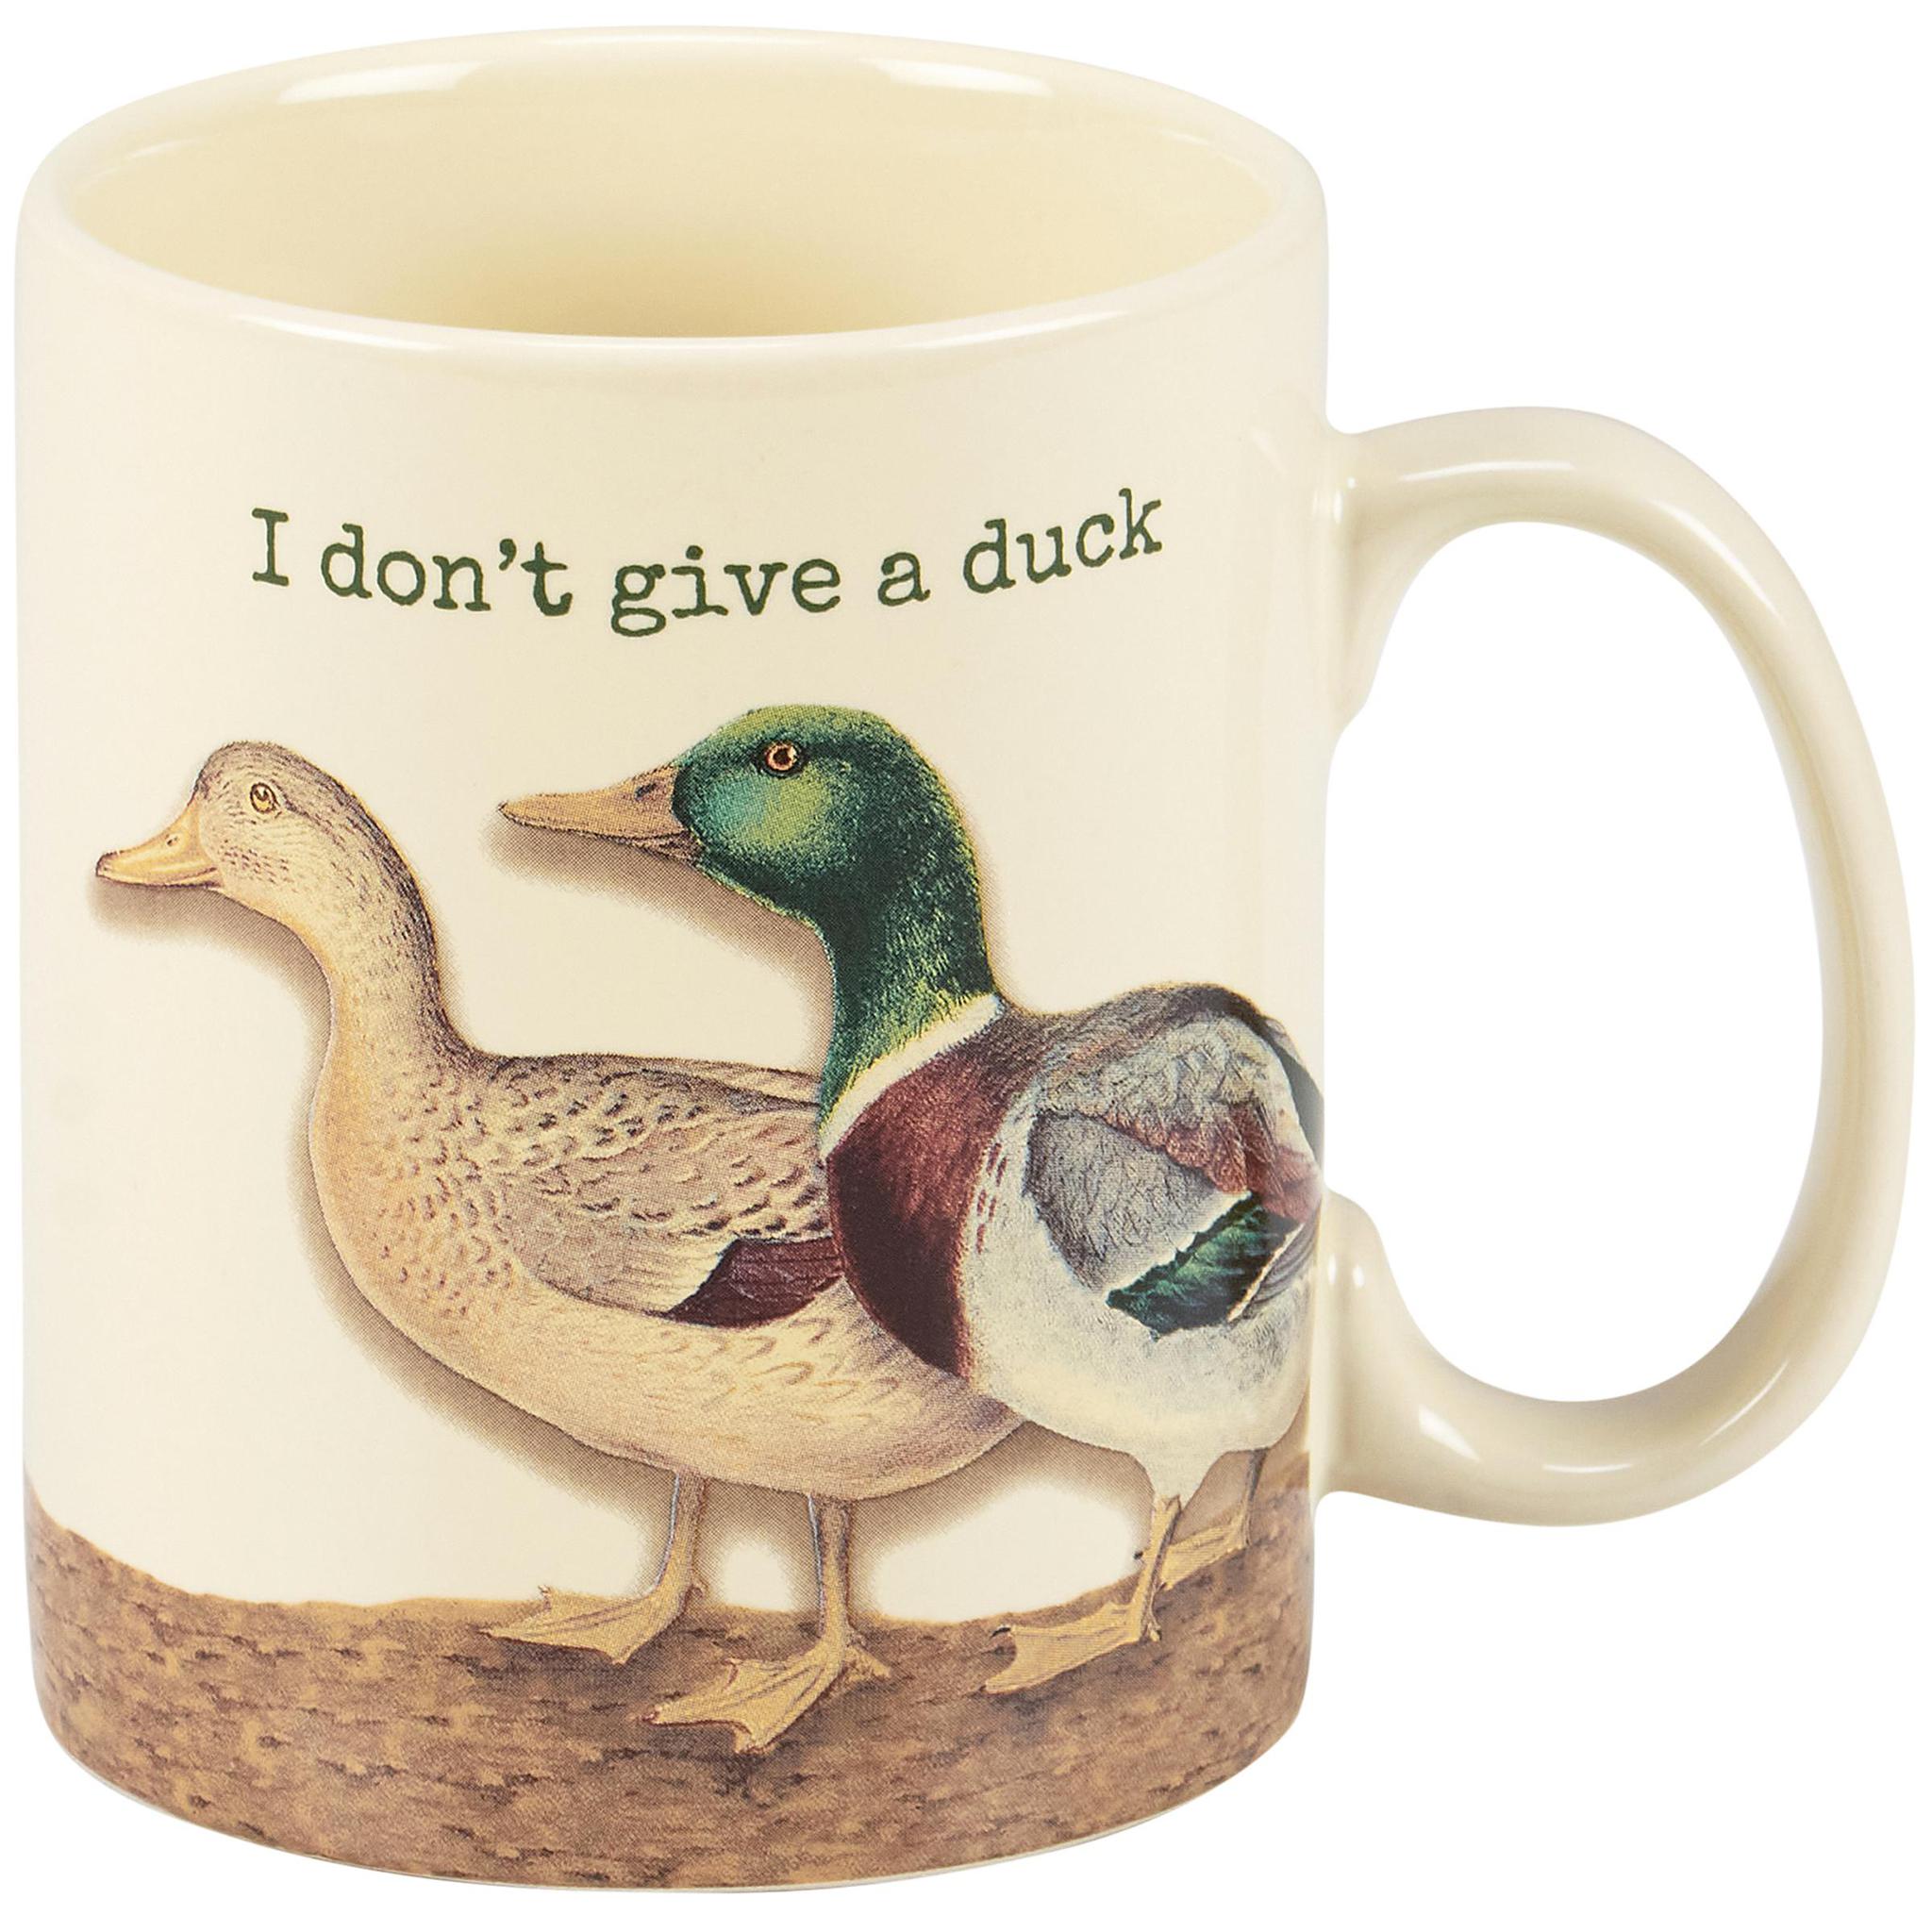 Give A Duck Mug